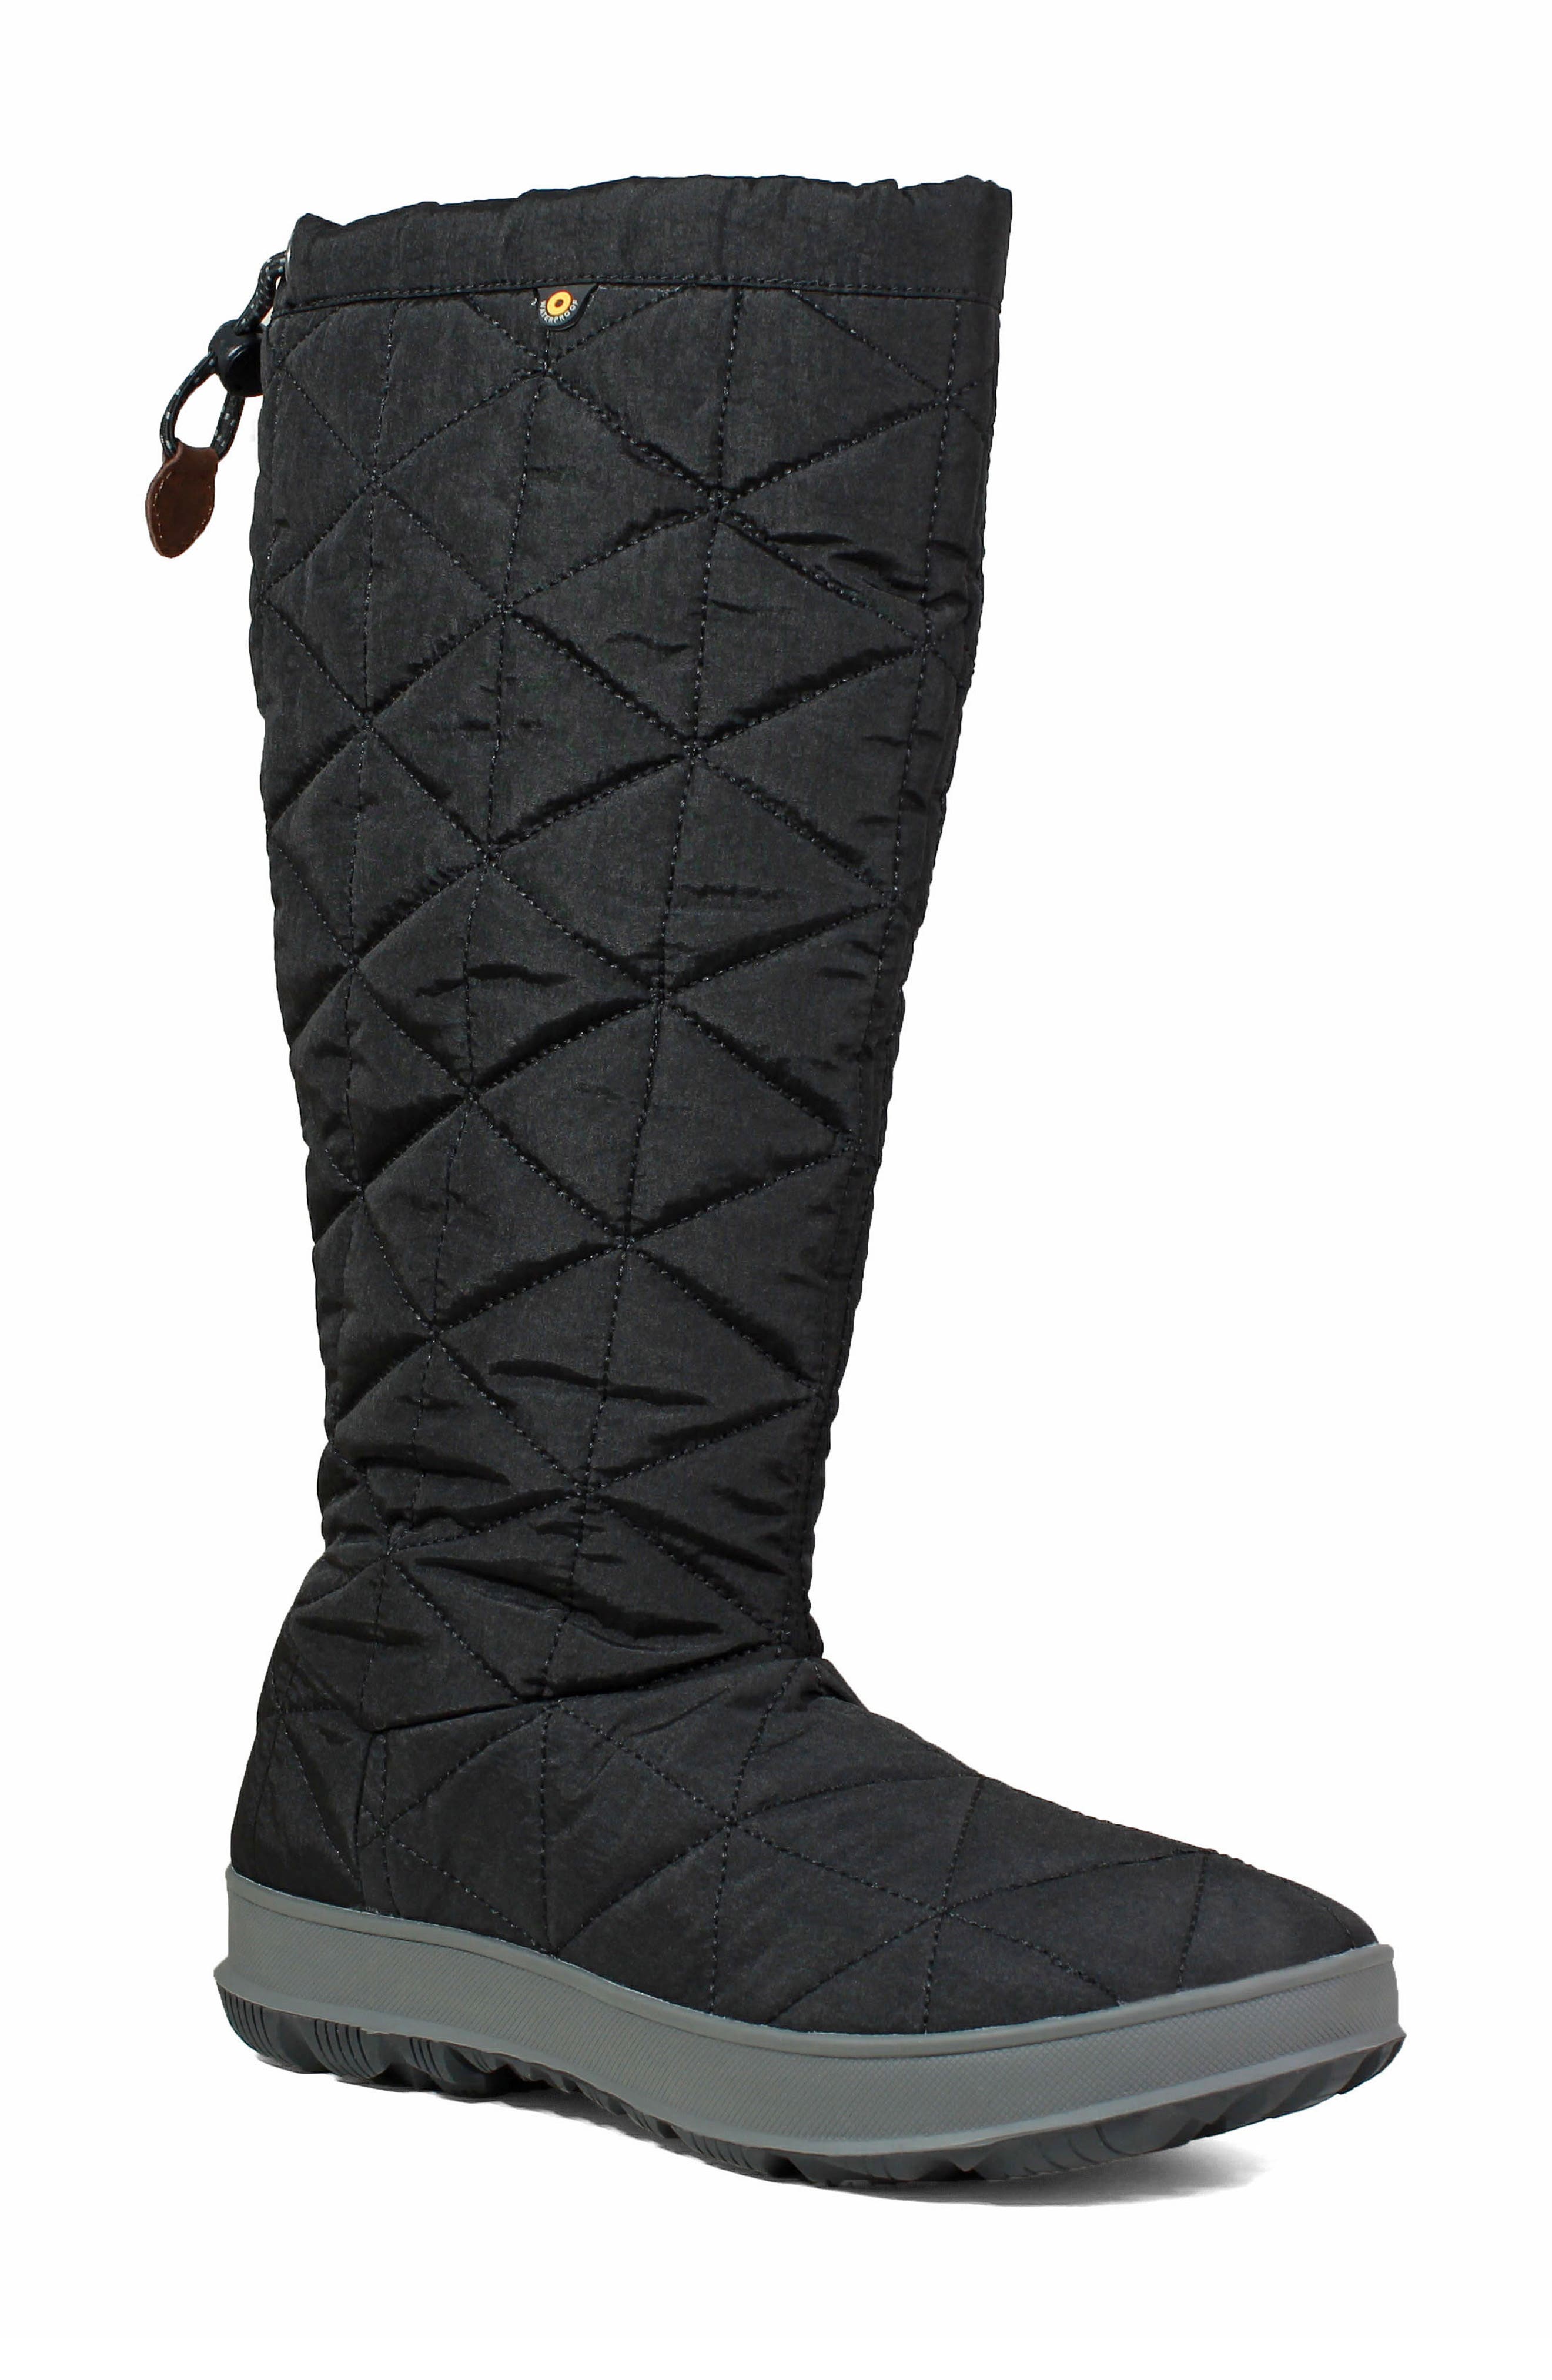 bogs tall winter boots